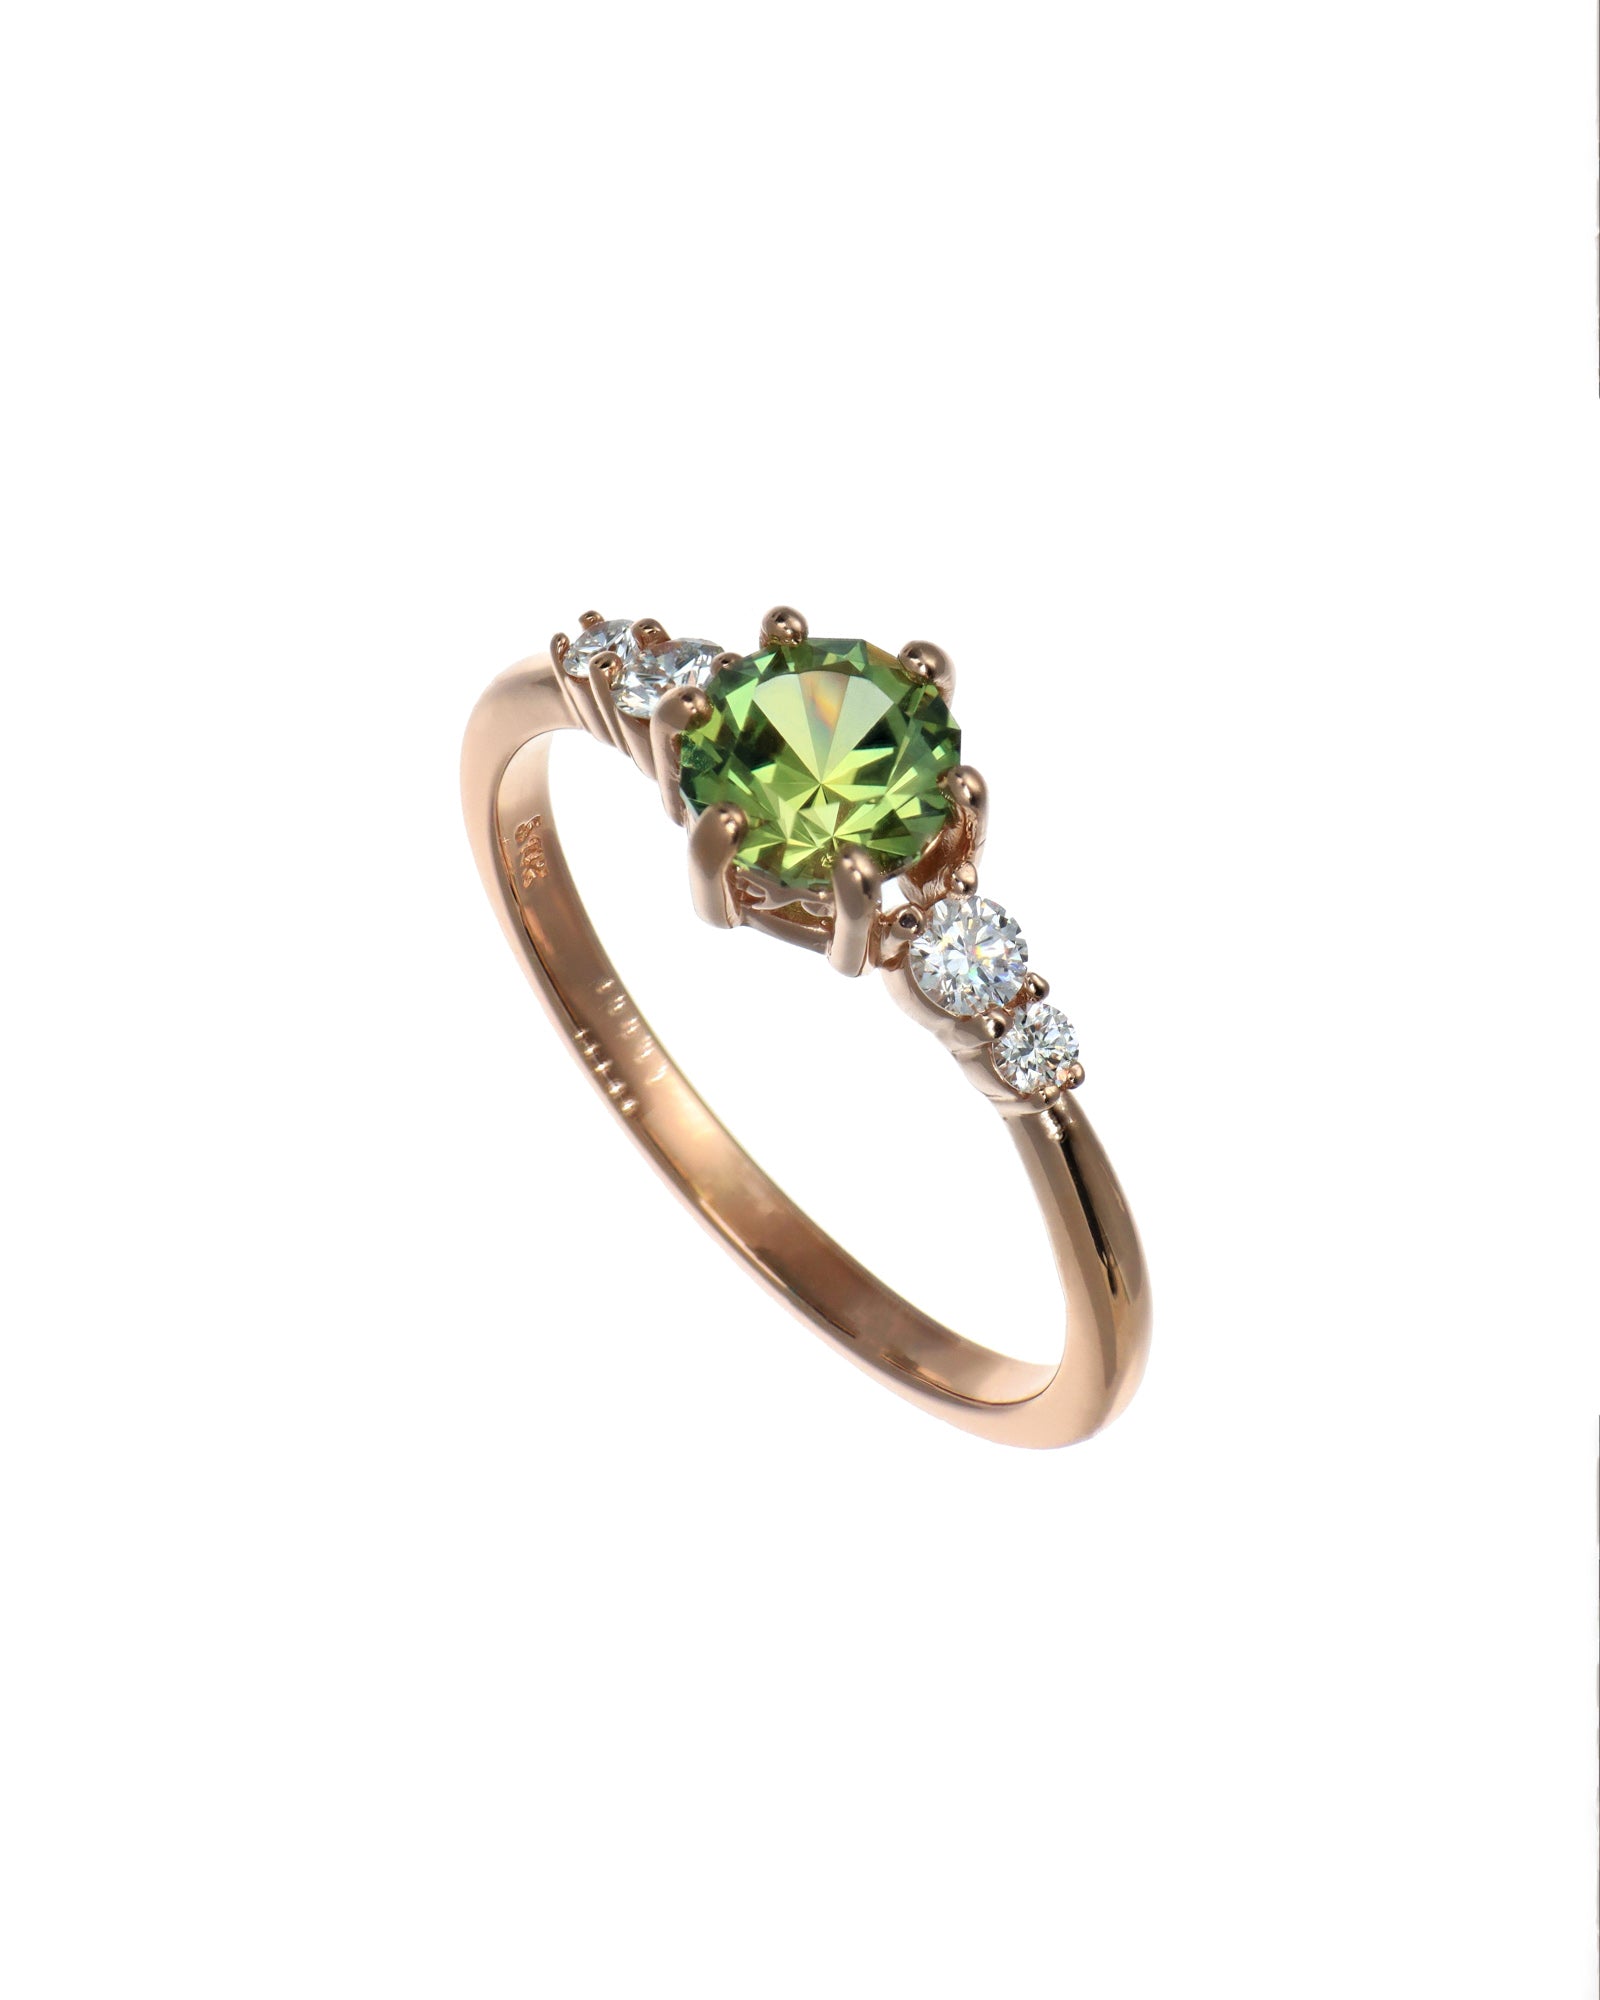 Green Montana Sapphire Ring